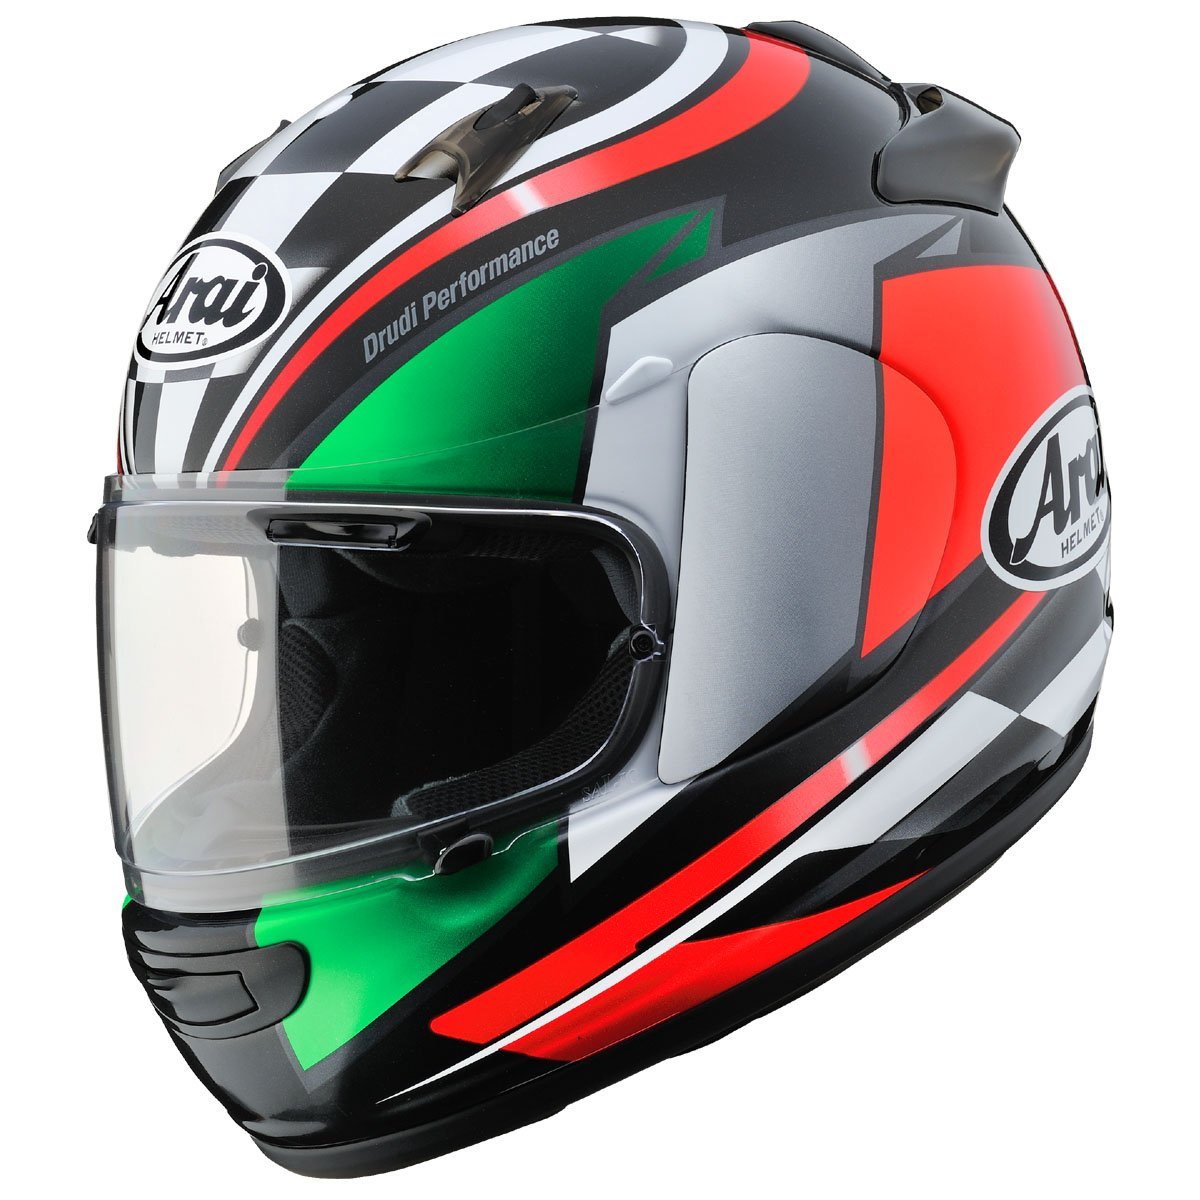 Ducati Corse Arai Helmet SBK 